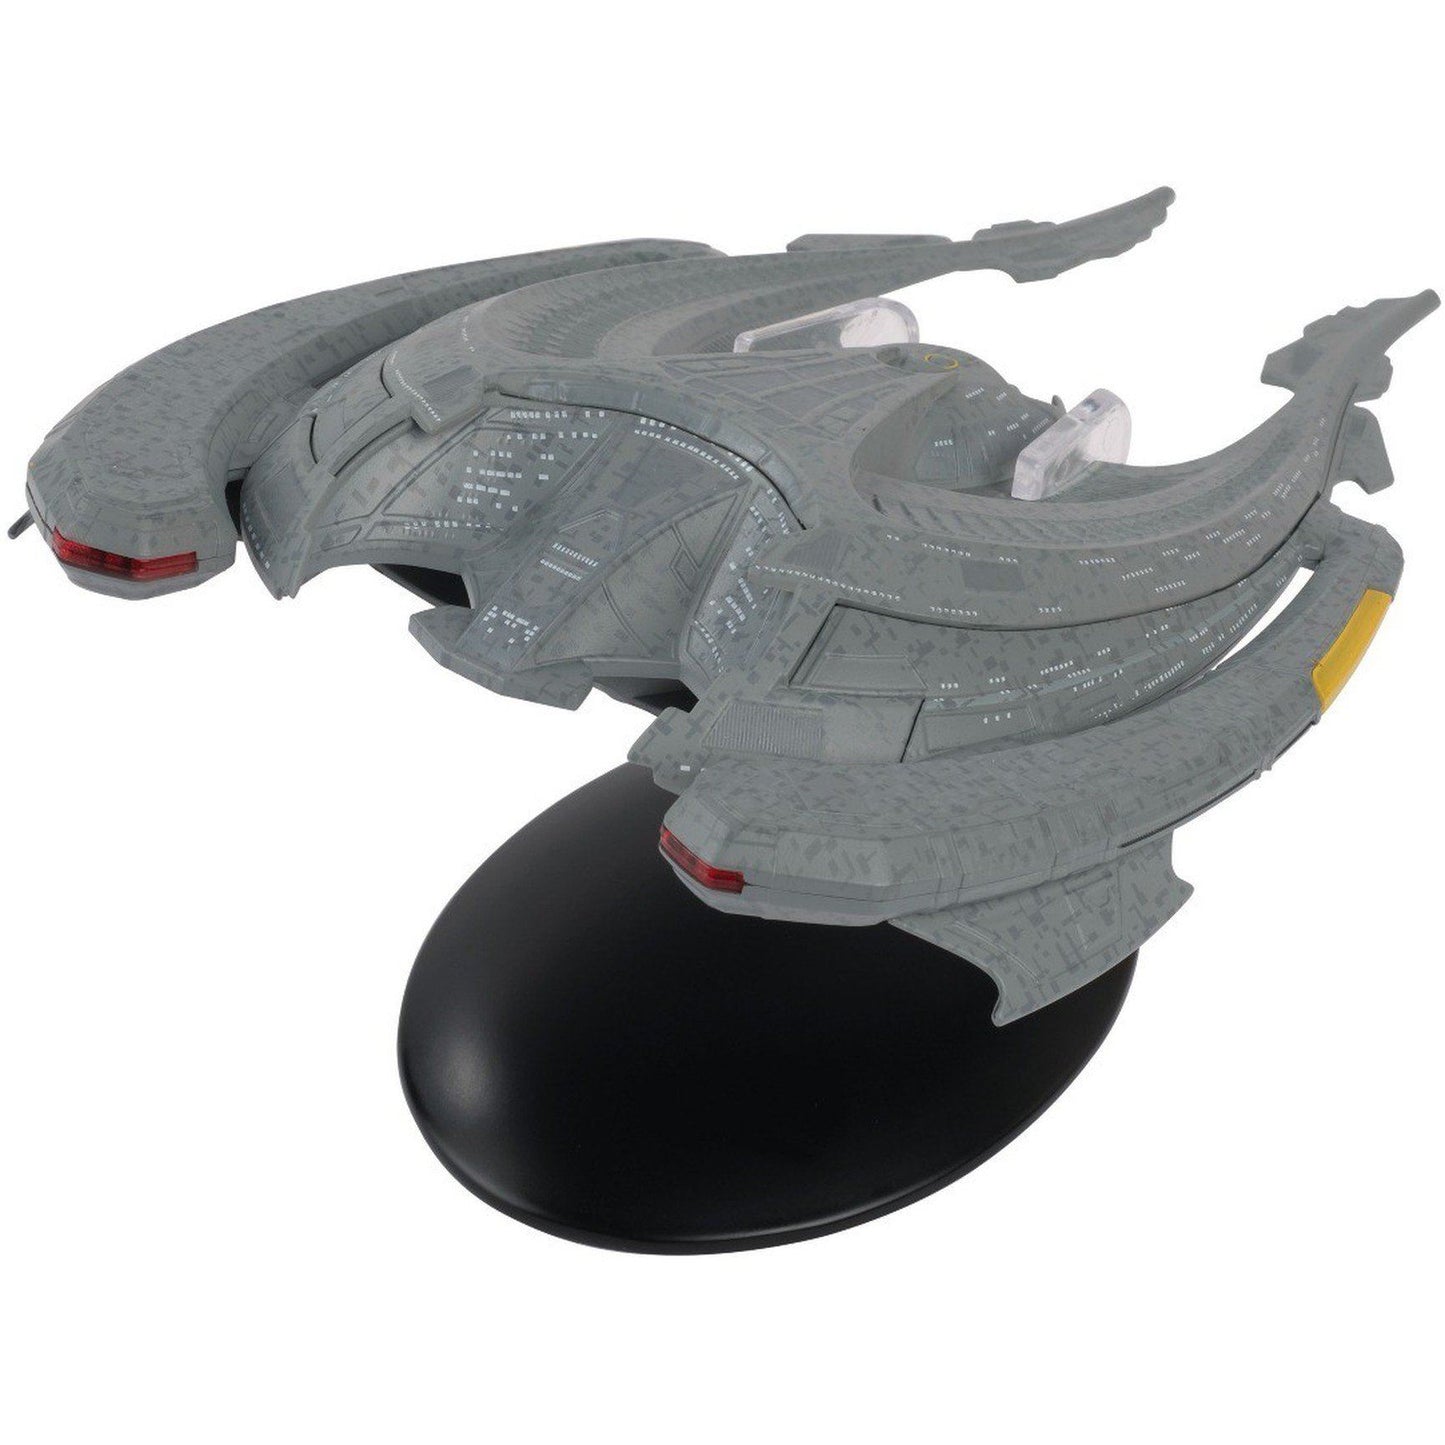 #19 Son'A Flagship Model Die Cast Ship SPECIAL ISSUE (Eaglemoss / Star Trek)